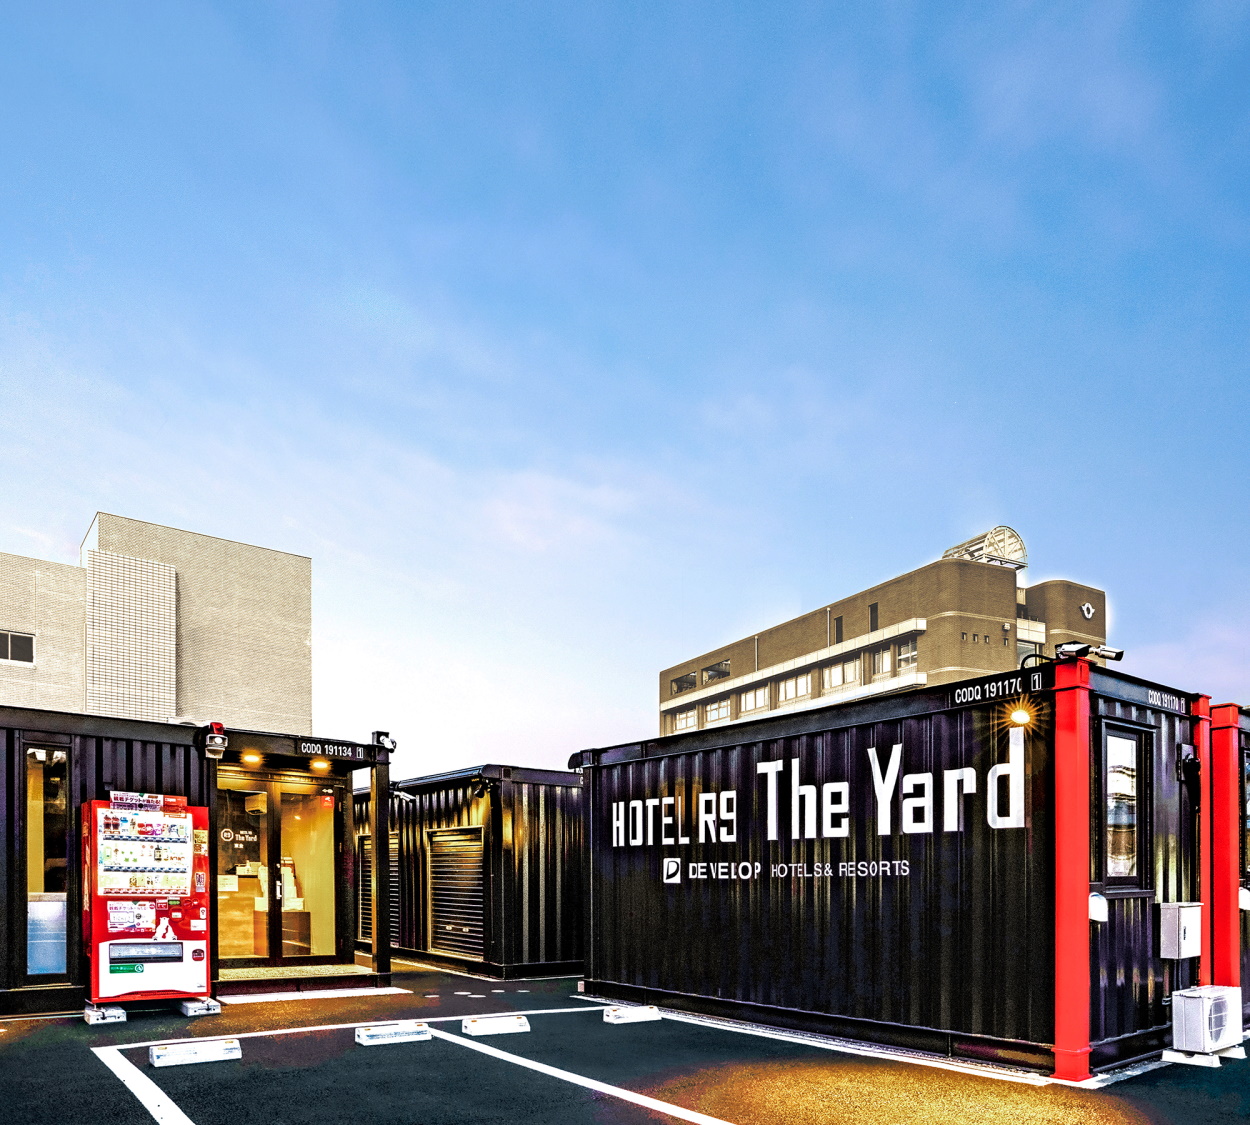 HOTEL R9 The Yard 東金 image